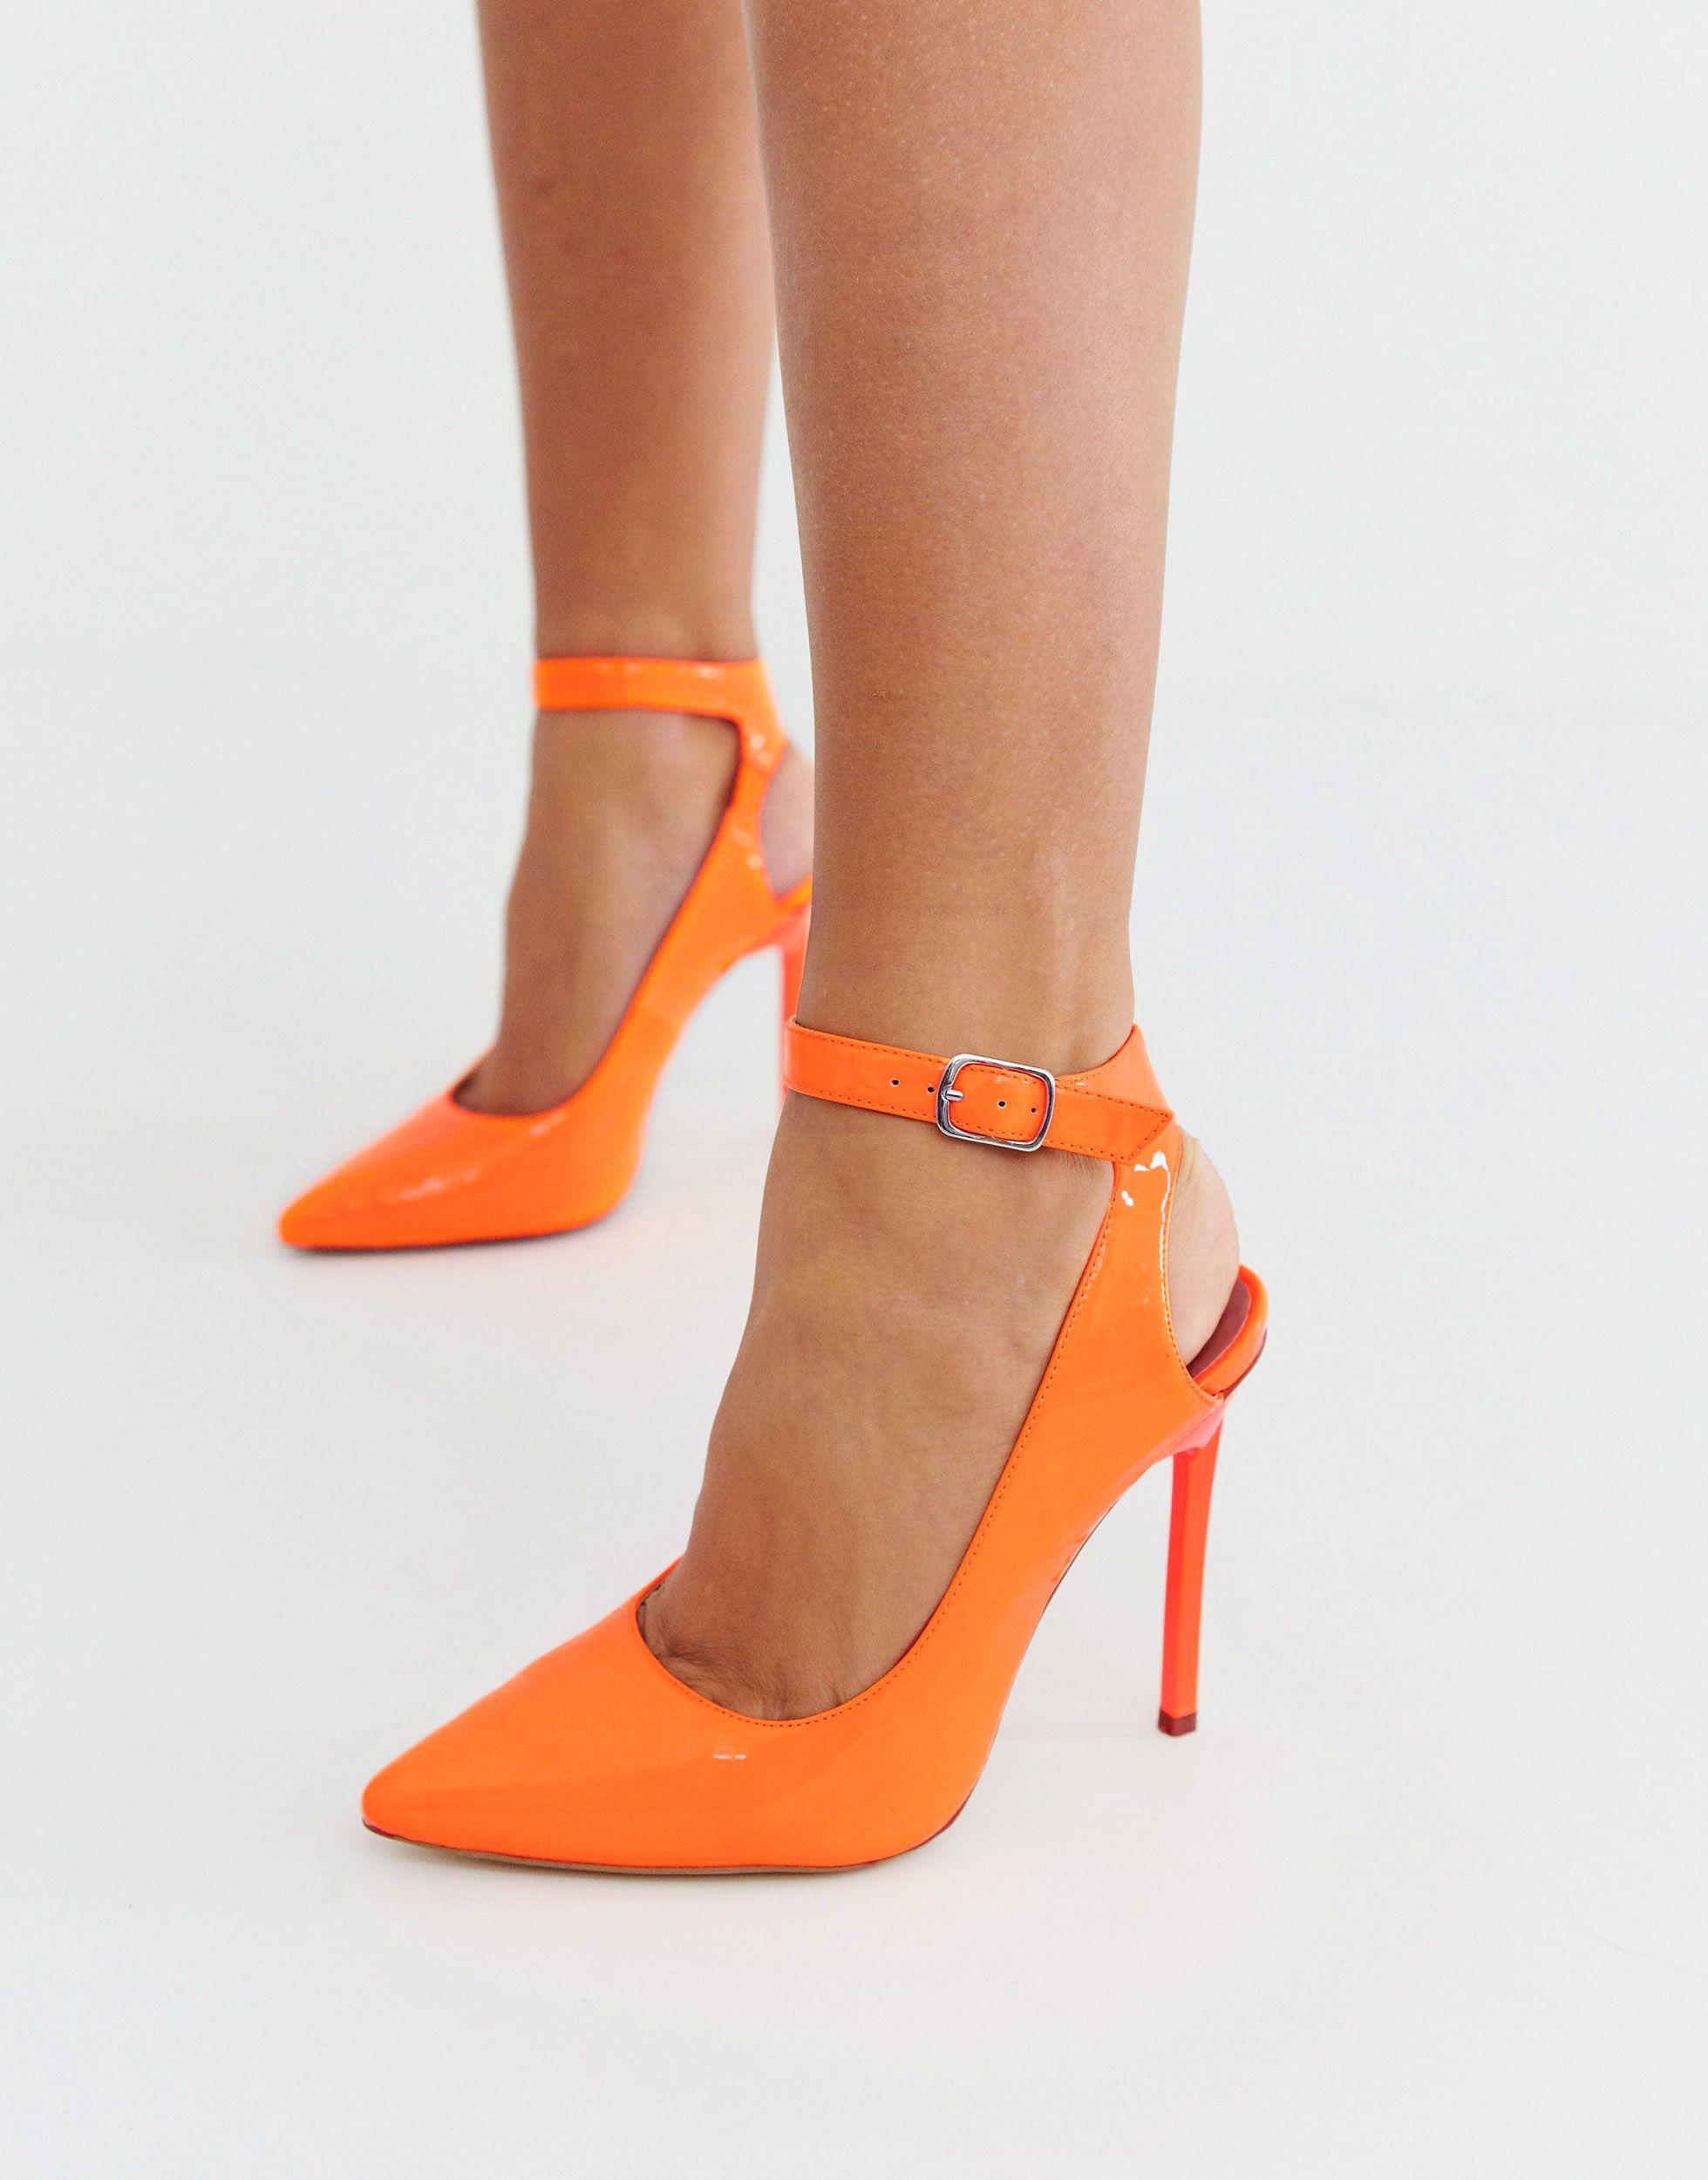 London Rebel Pointed Stiletto Heels in Orange | Lyst